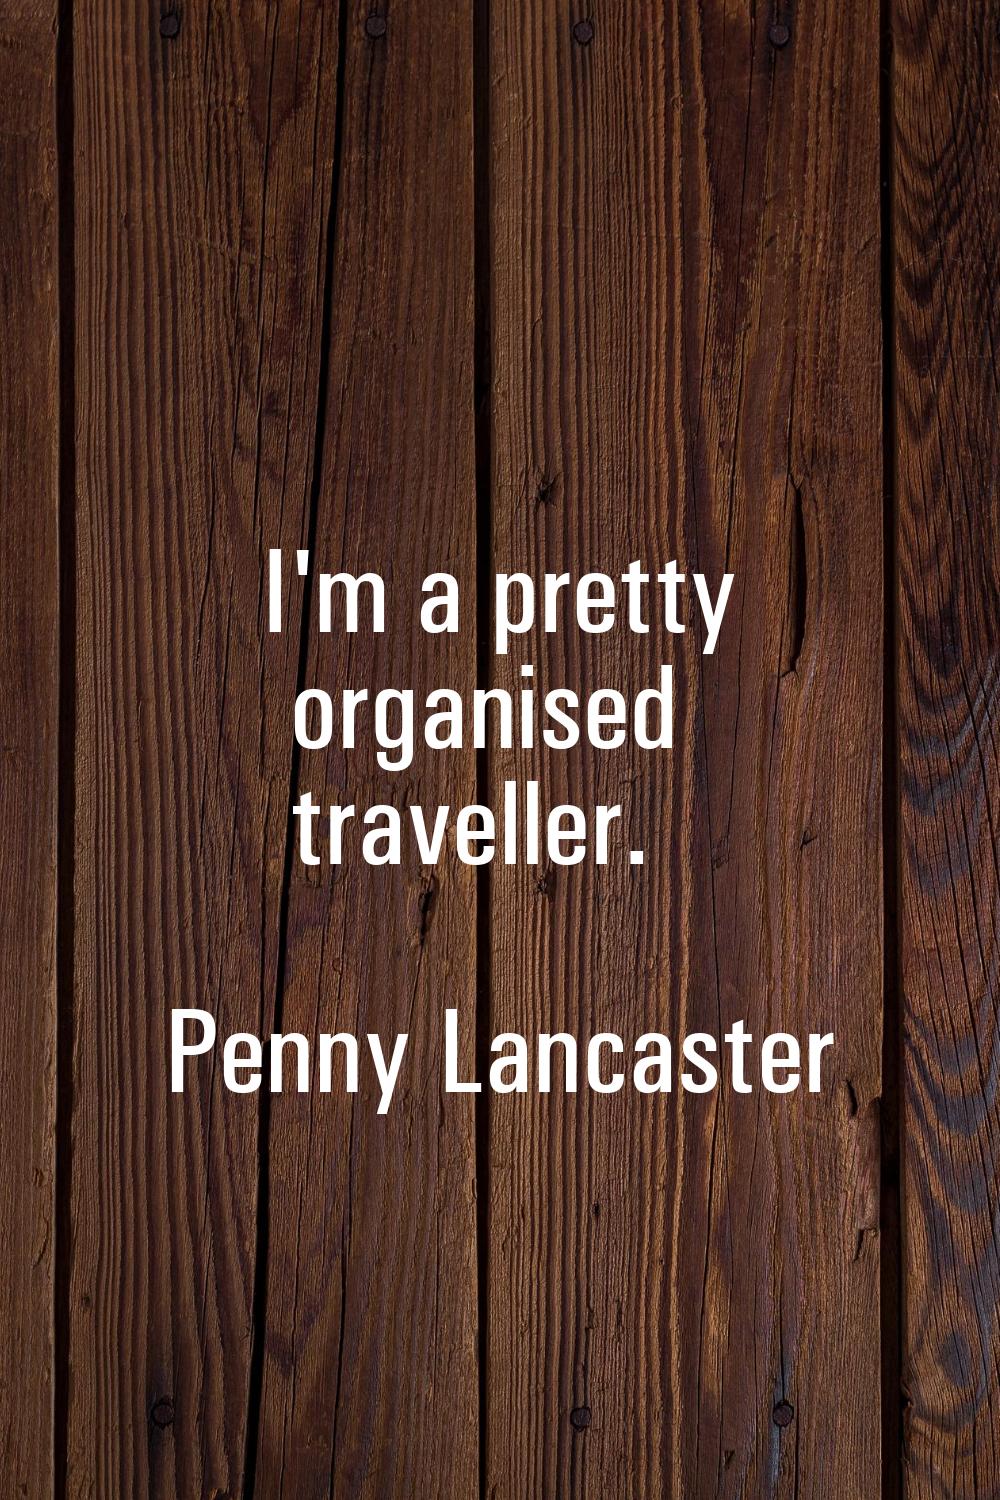 I'm a pretty organised traveller.